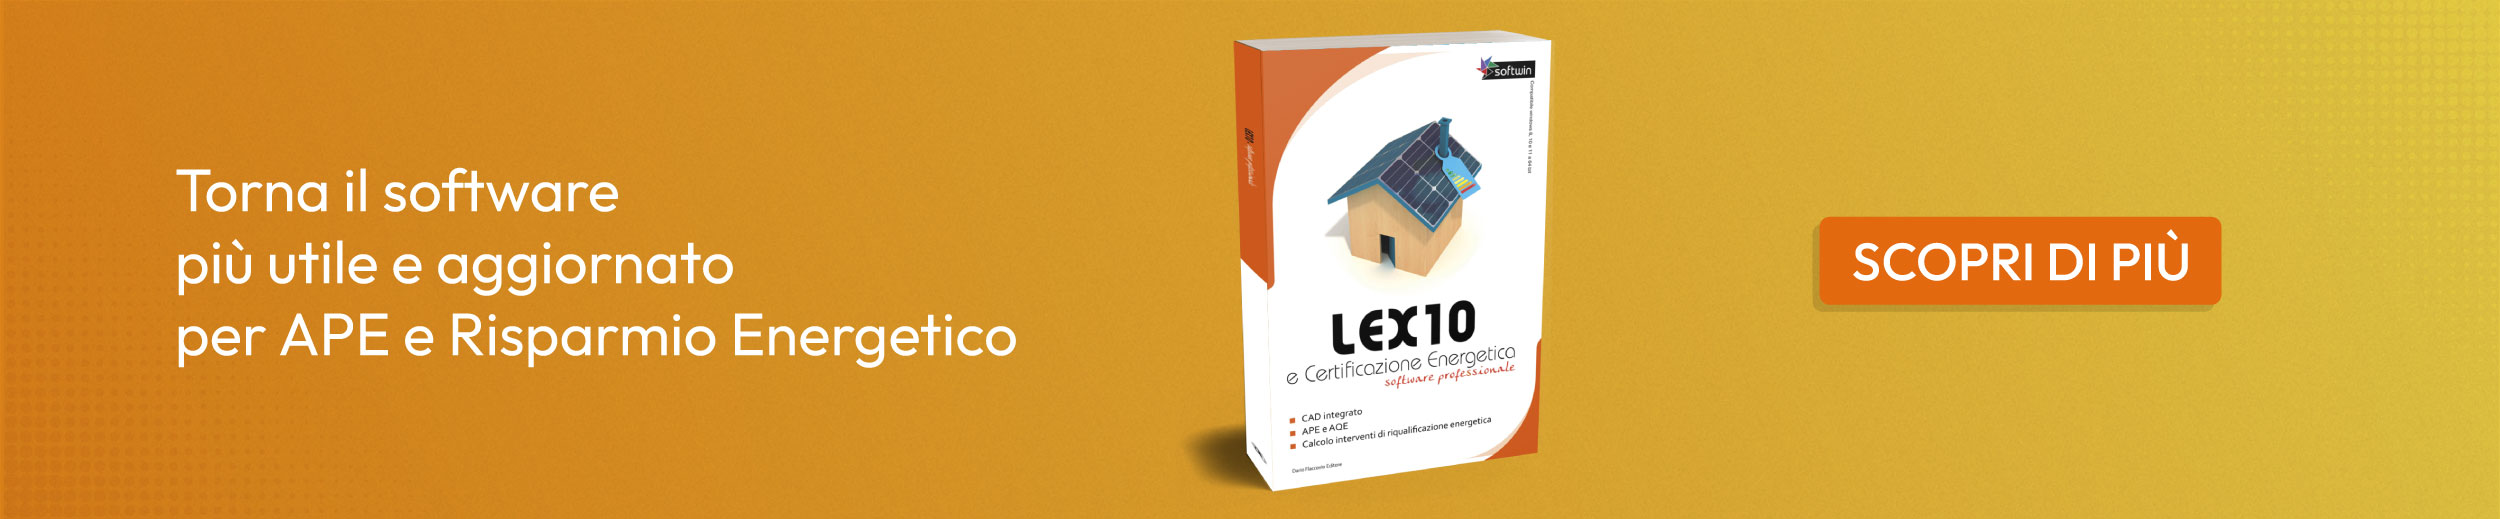 Lex10 e certificazione energetica - Software professionale